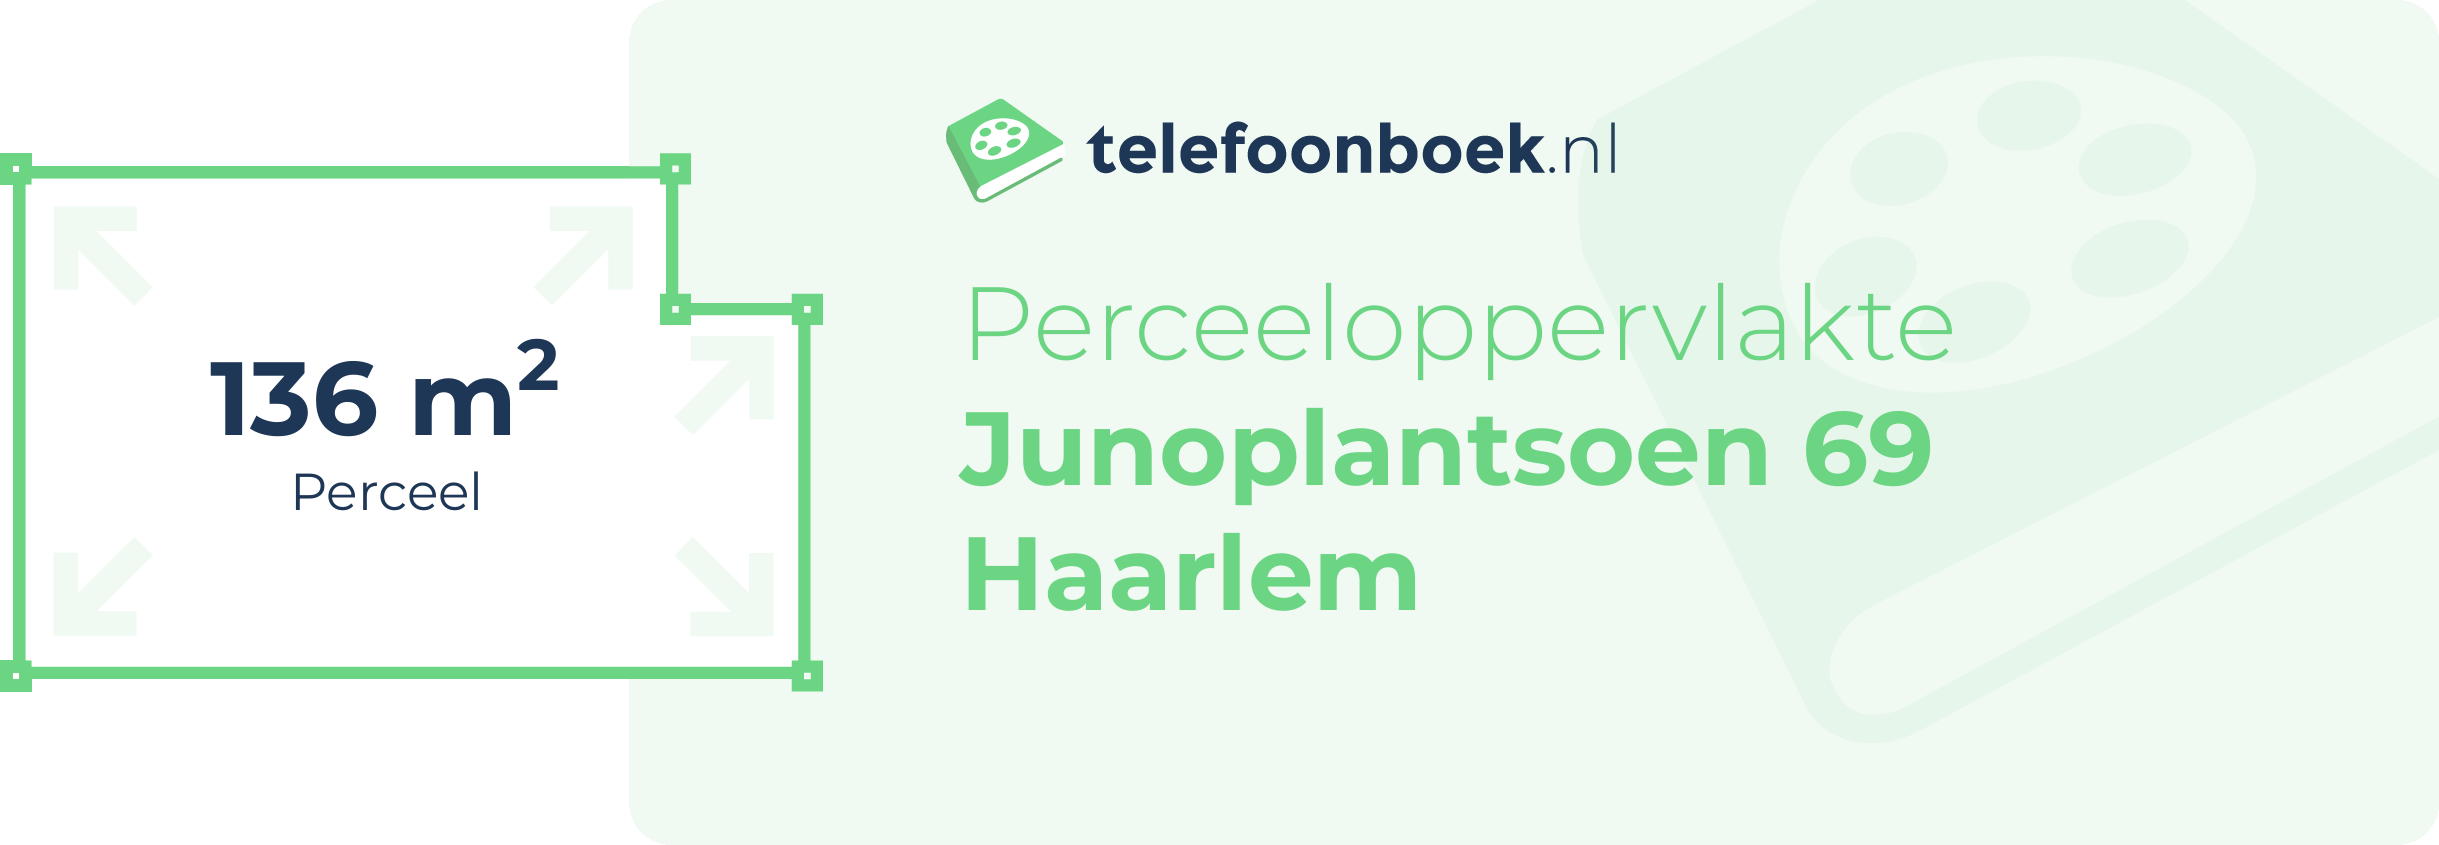 Perceeloppervlakte Junoplantsoen 69 Haarlem